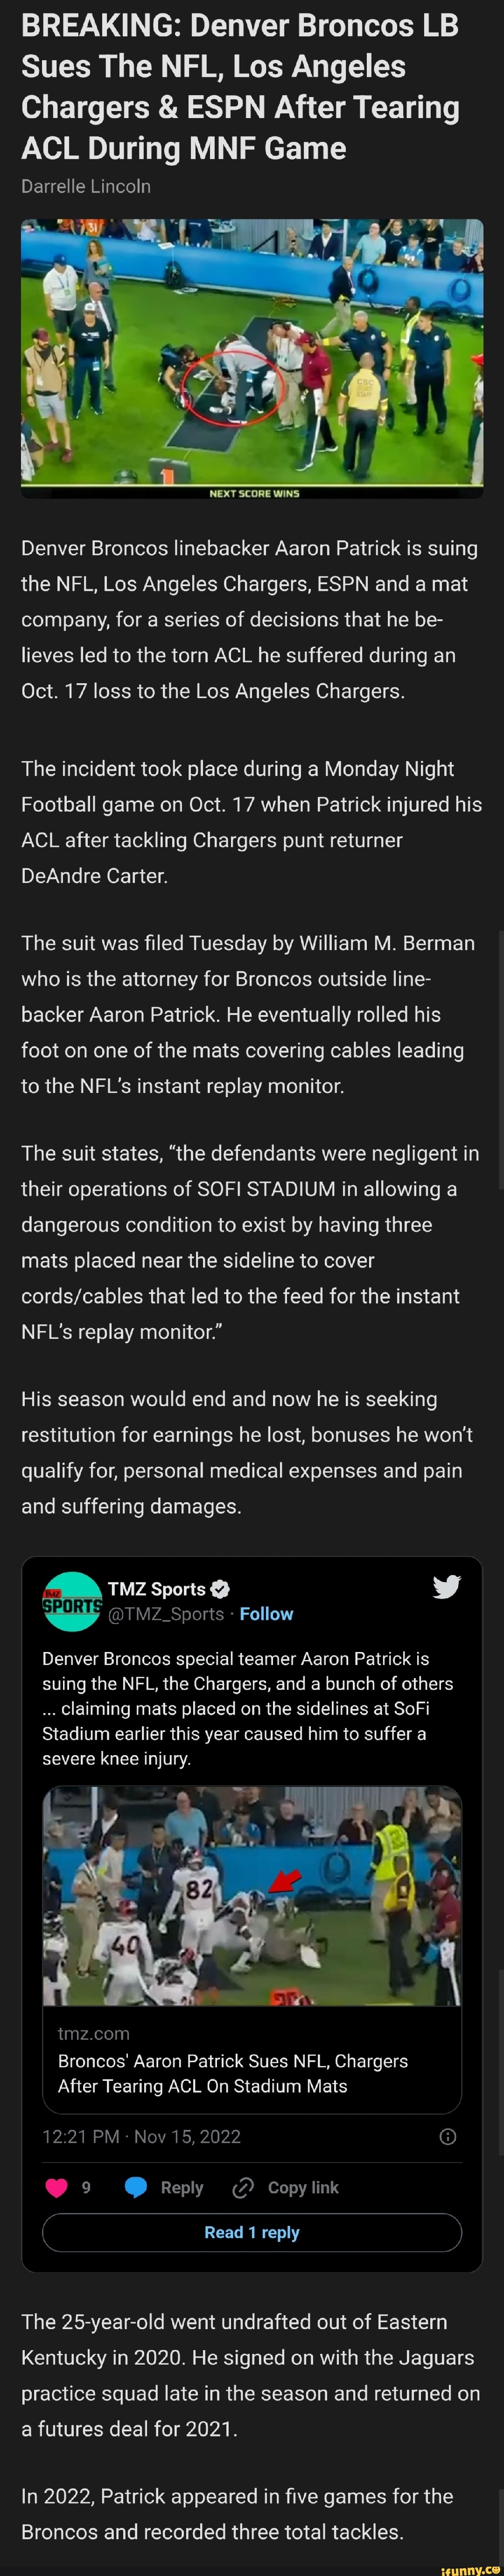 Broncos' Aaron Patrick sues NFL, LA Chargers, SoFi Stadium